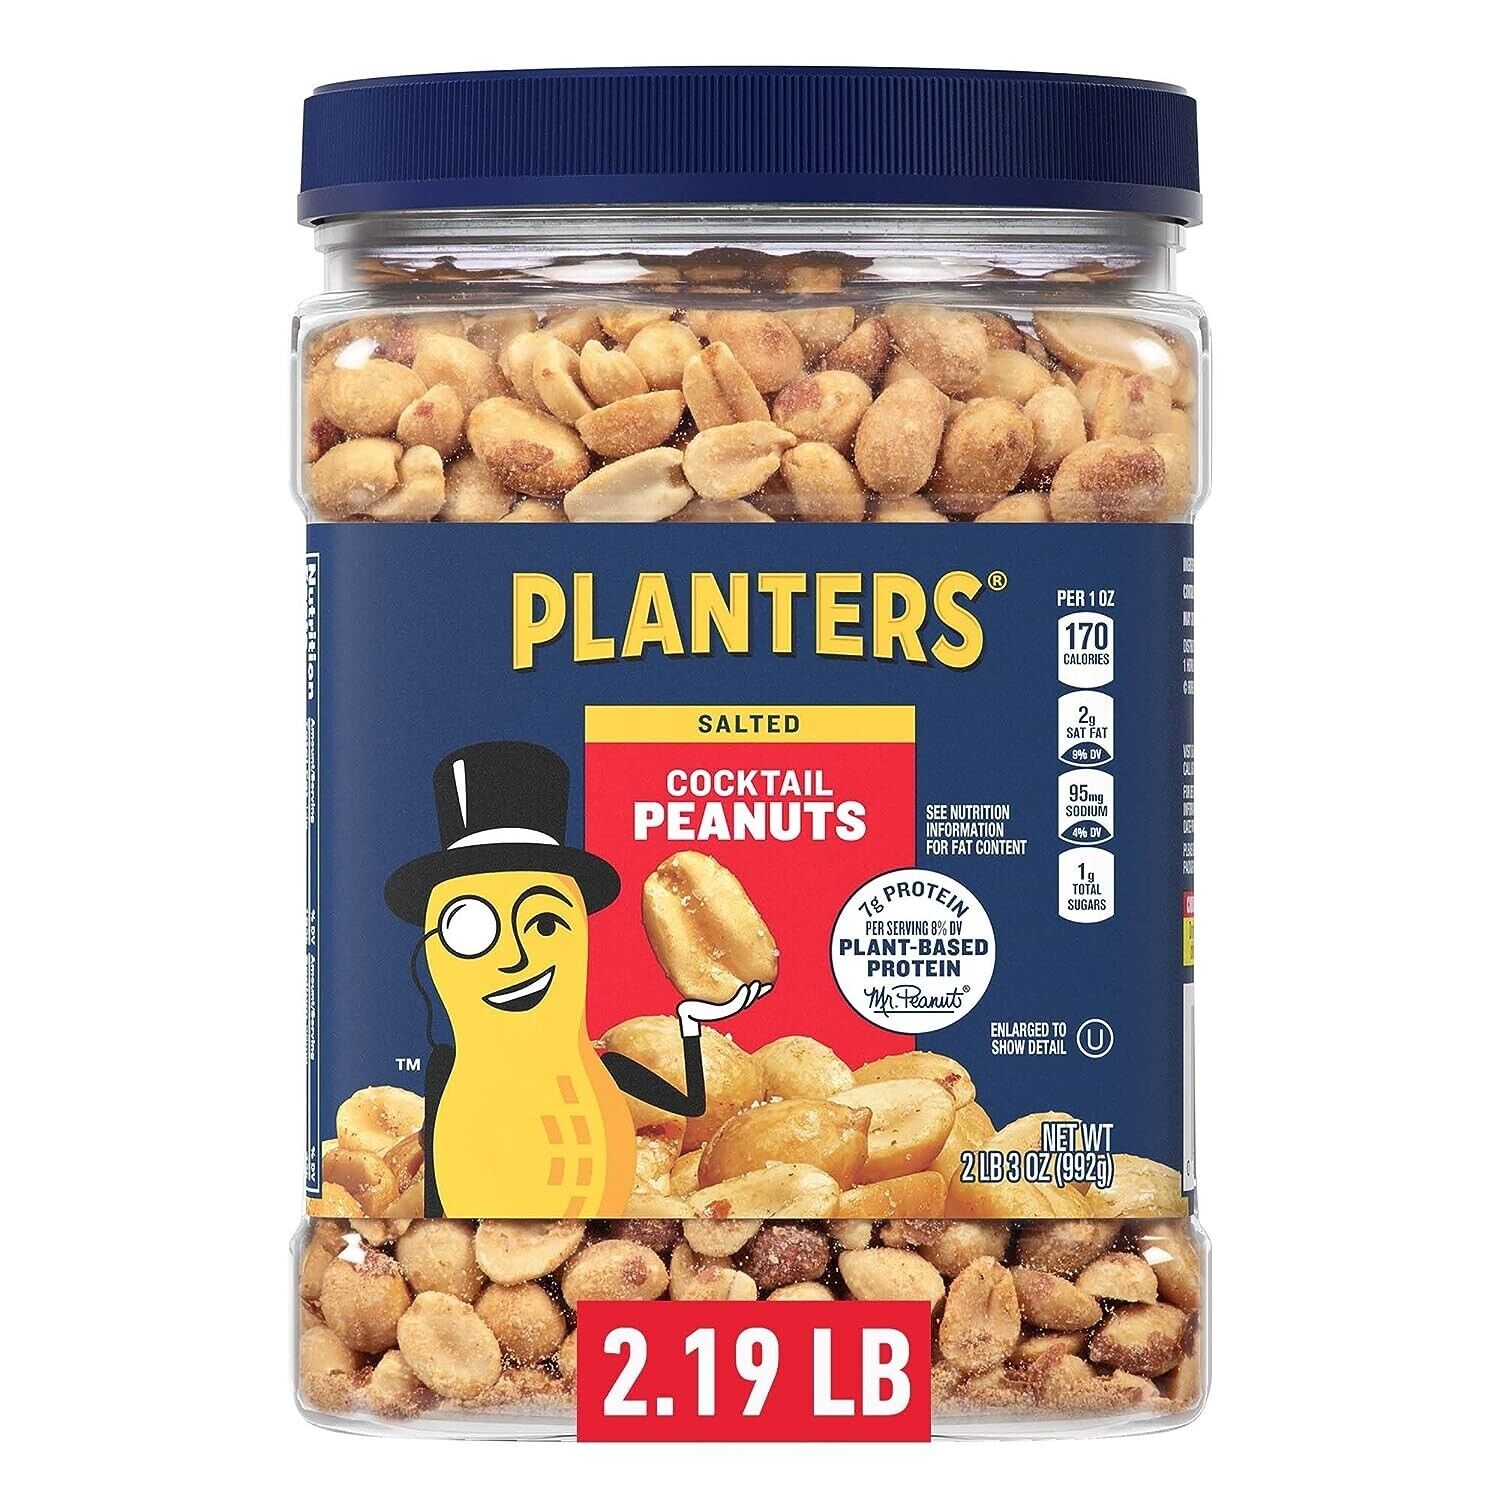 PLANTERS Salted Cocktail Peanuts - 2.19 lb Jar